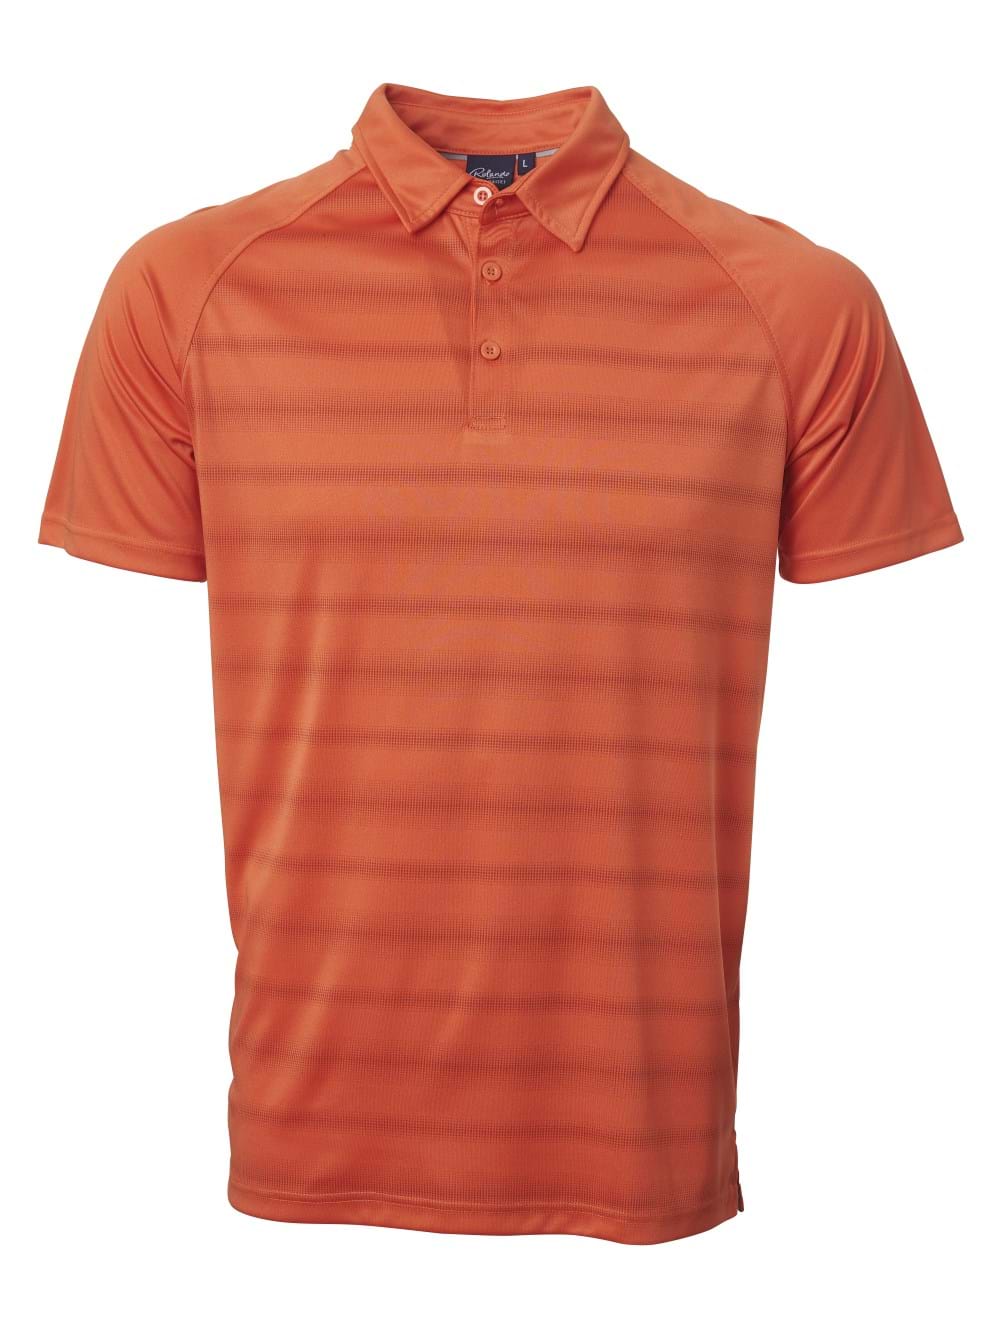 Pivot Golfer - Orange / SS